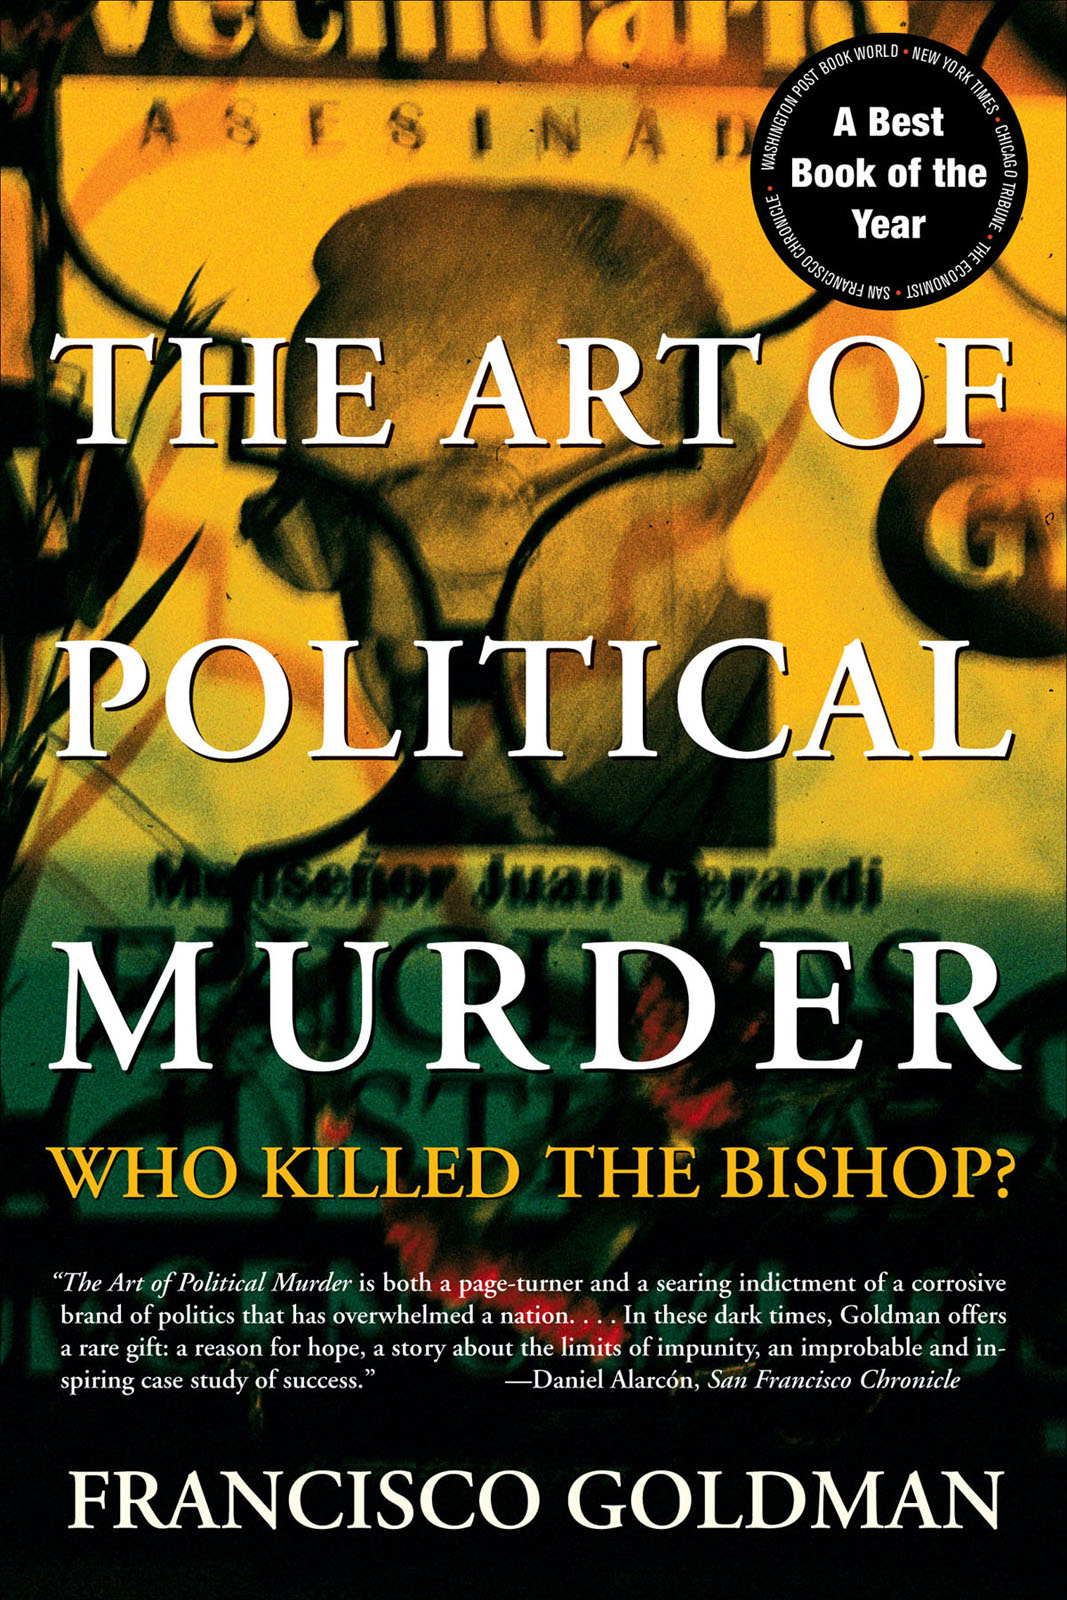 The Art of Political Murder (2007) by Francisco Goldman